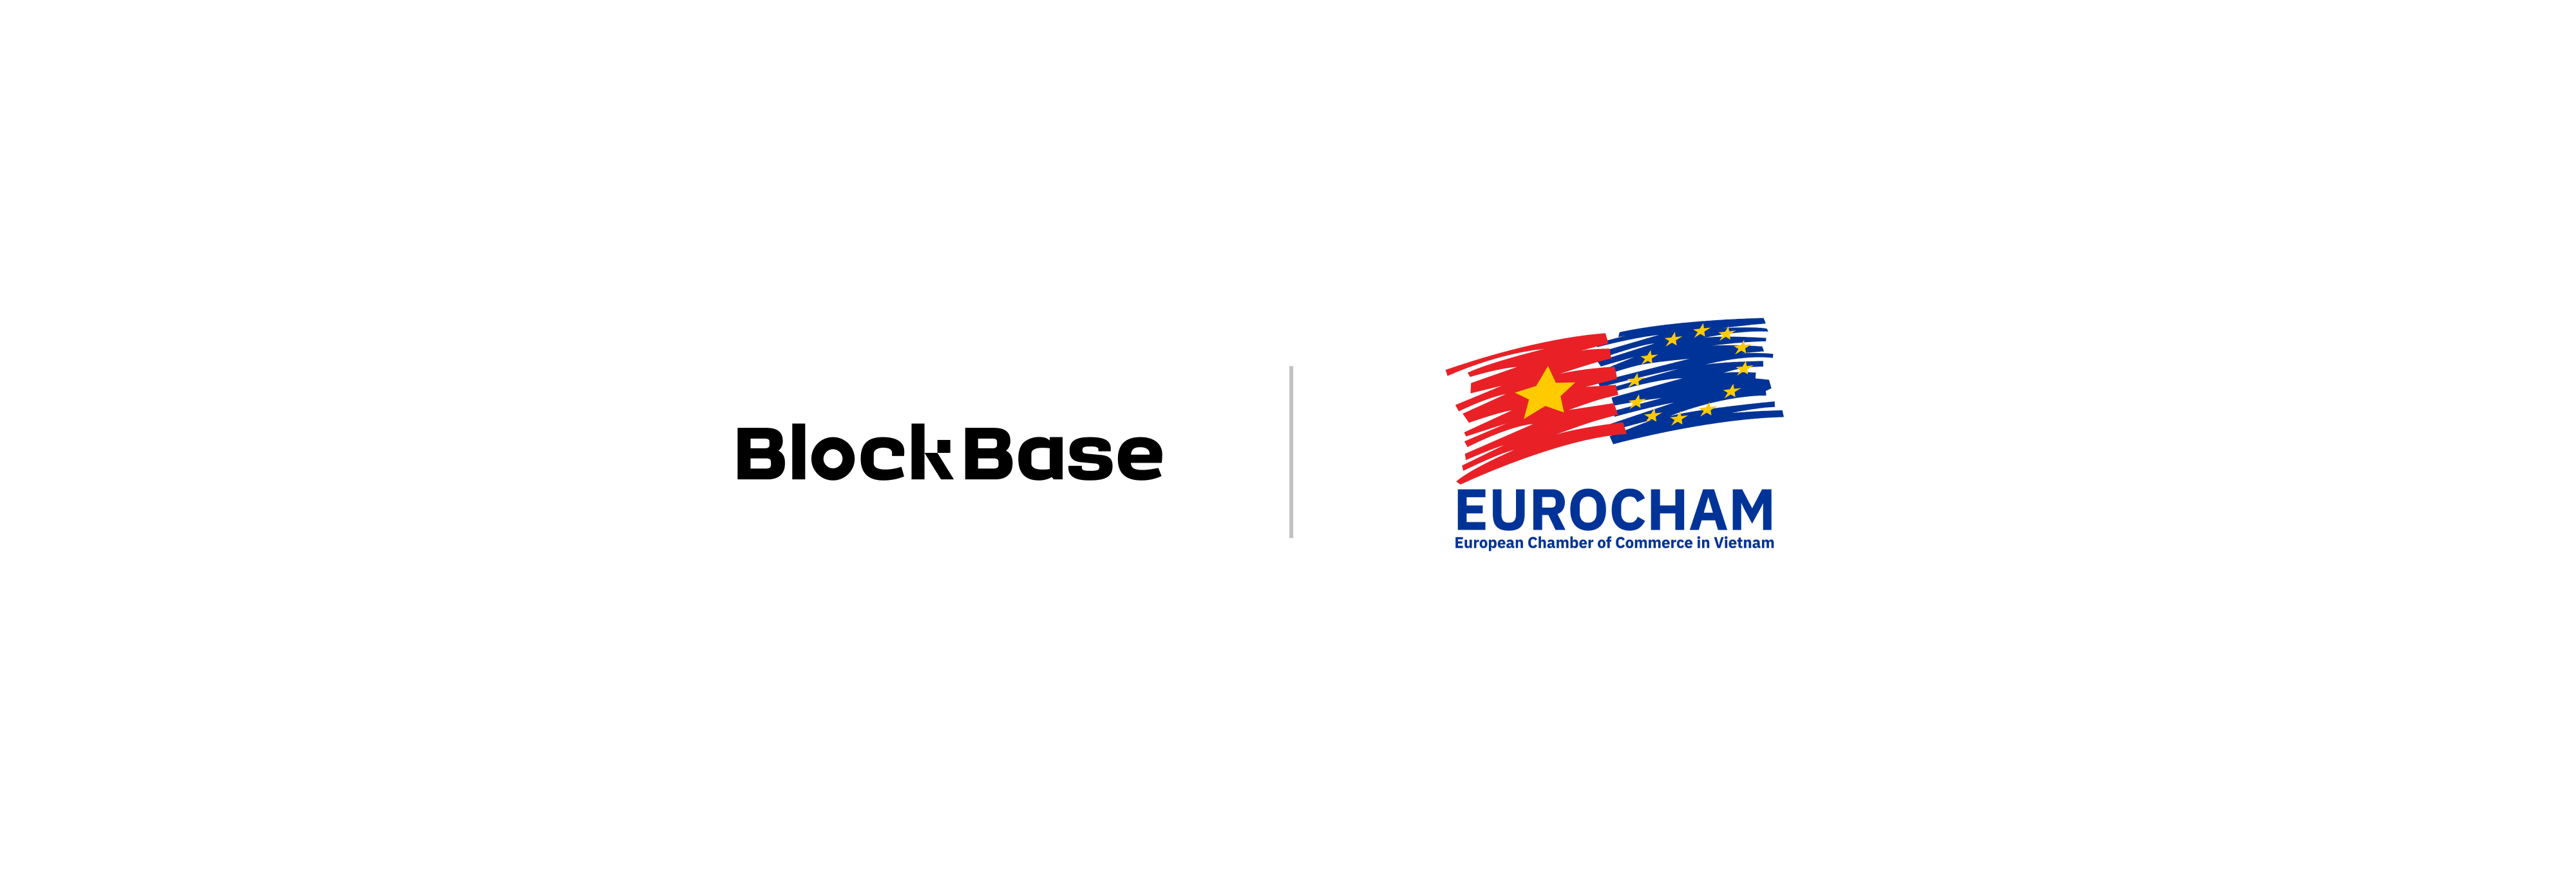 BlockBase Ventures Expands Horizons: Unlocking New Growth Opportunities With EuroCham